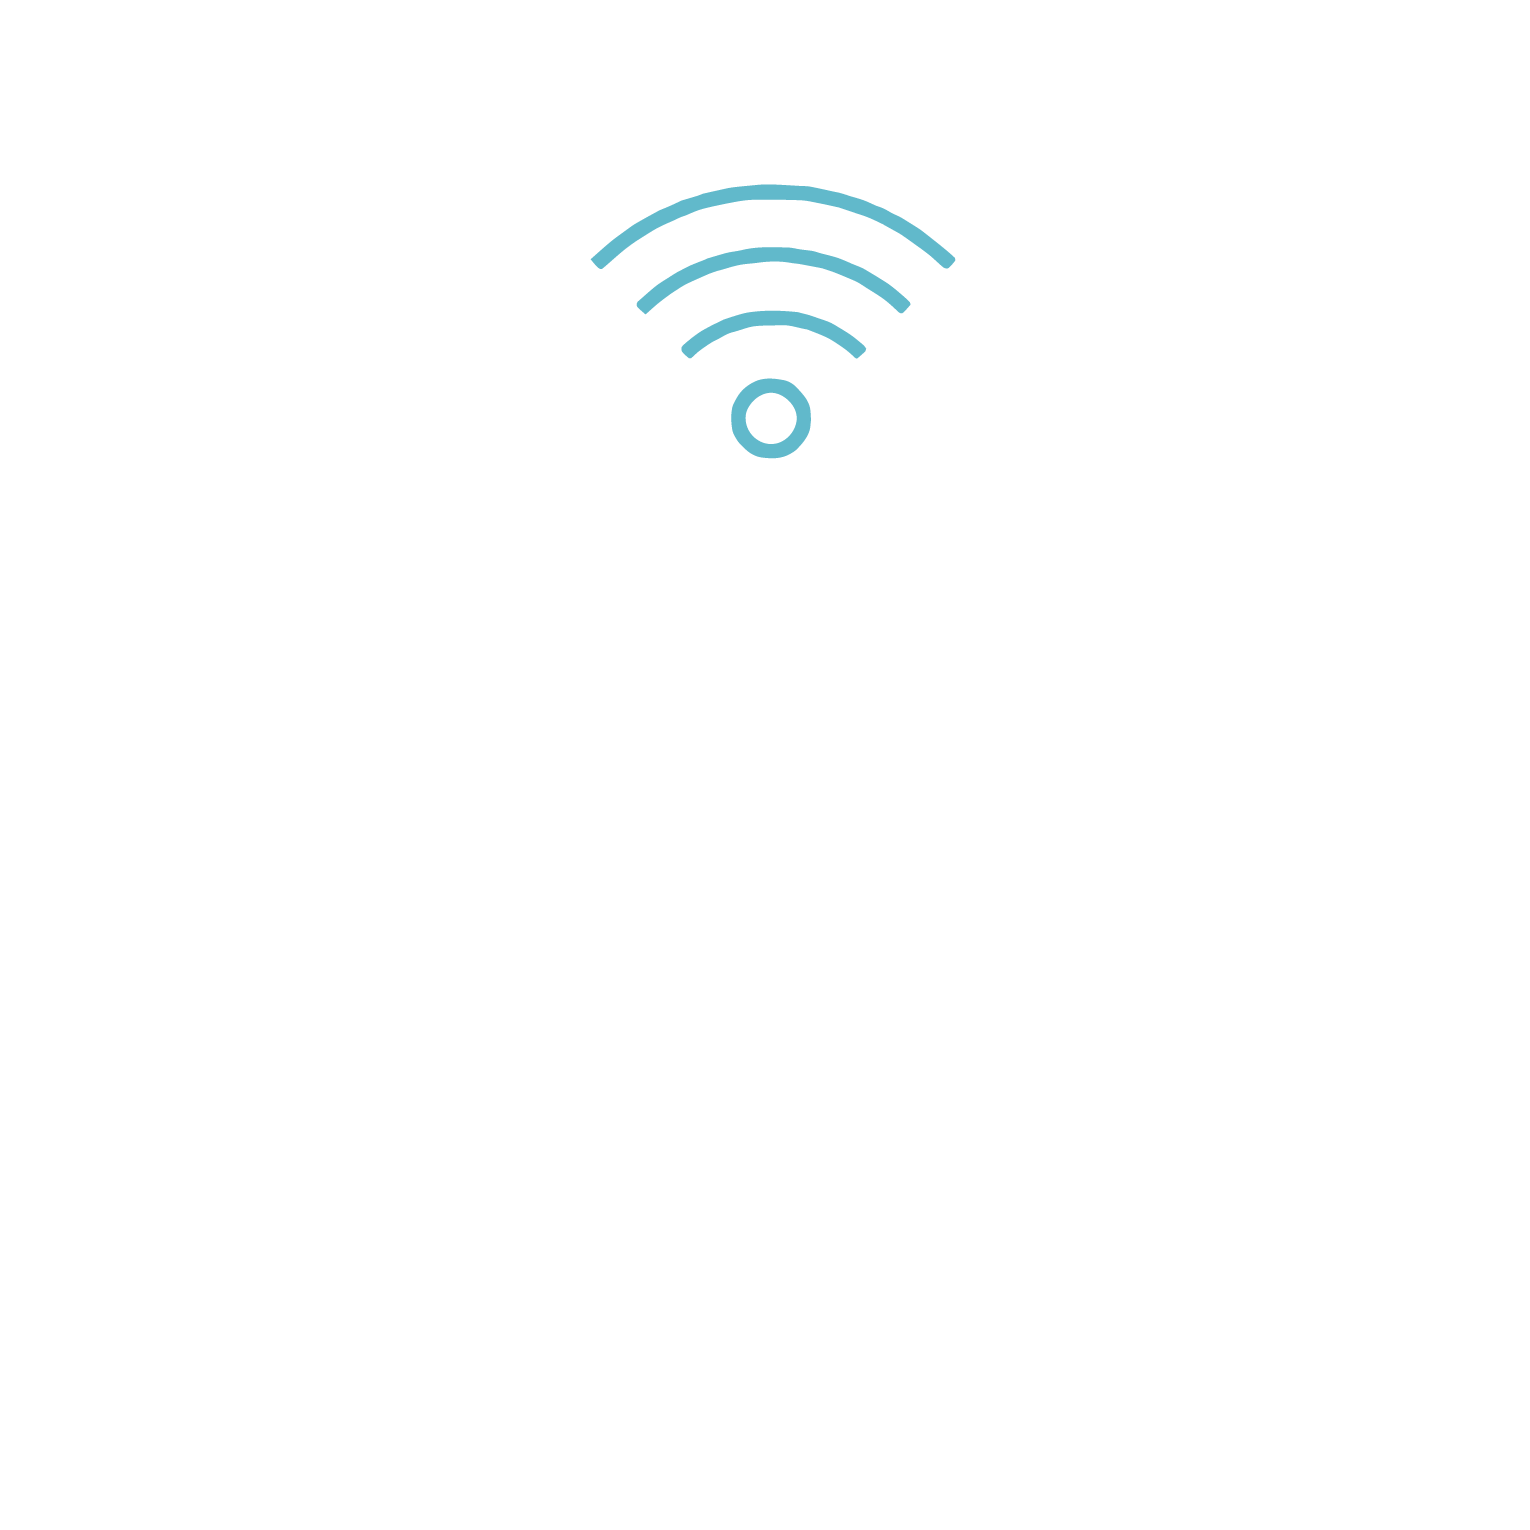 telematics icon